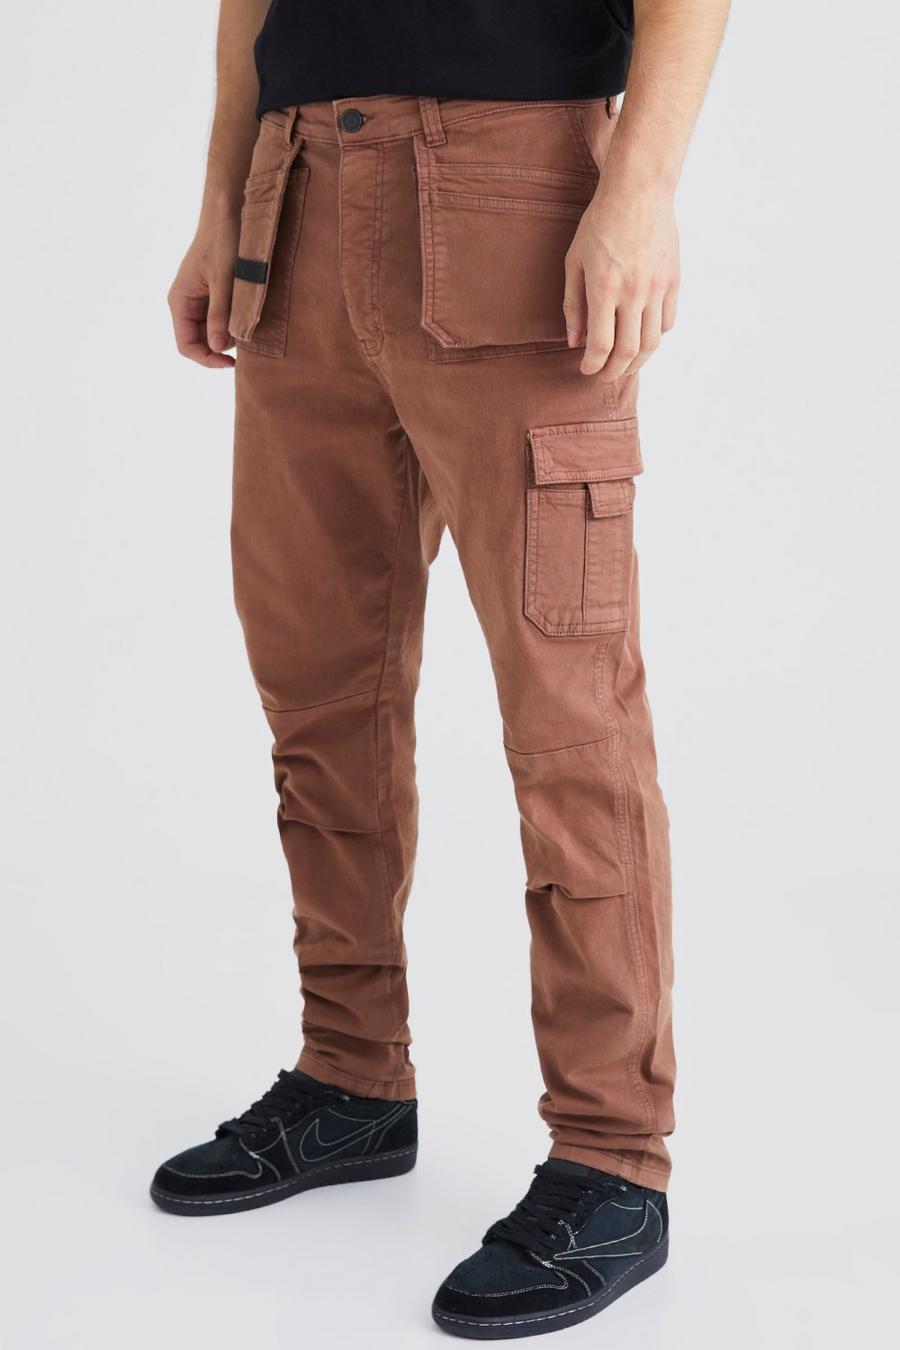 Pantaloni Cargo Tall Slim Fit con spalline, Chocolate marrone